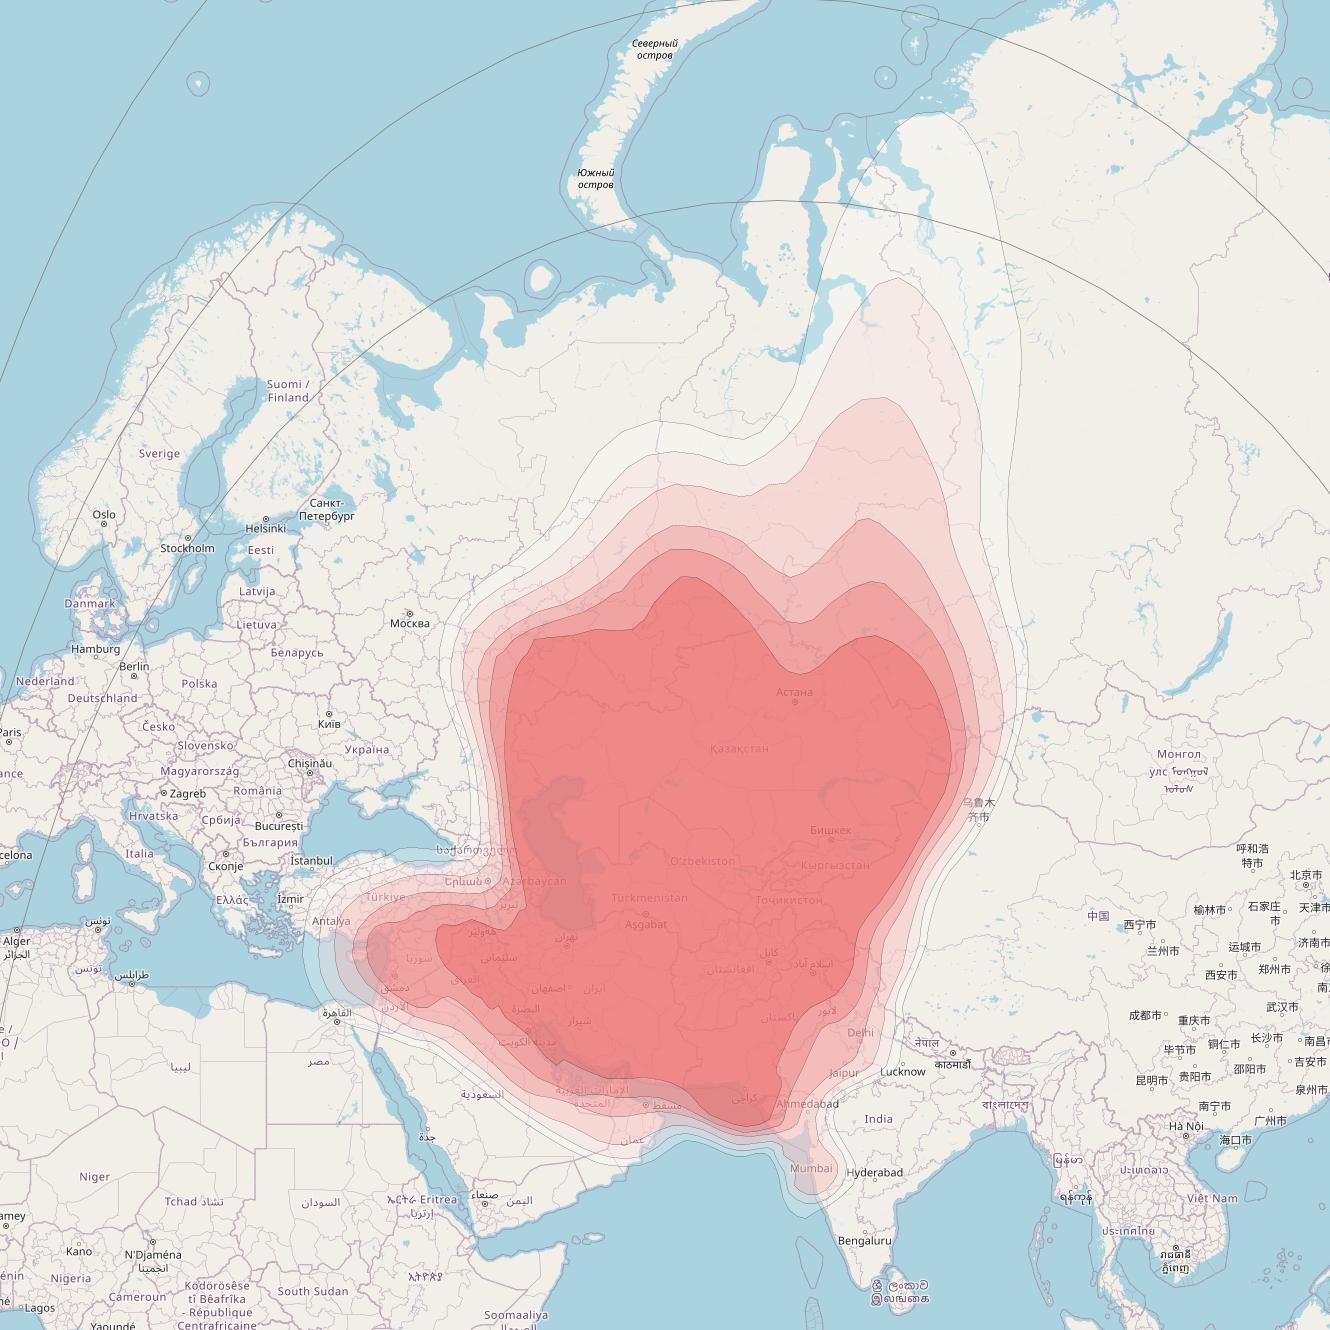 Eutelsat 70B at 70° E downlink Ku-band Central Asia beam coverage map